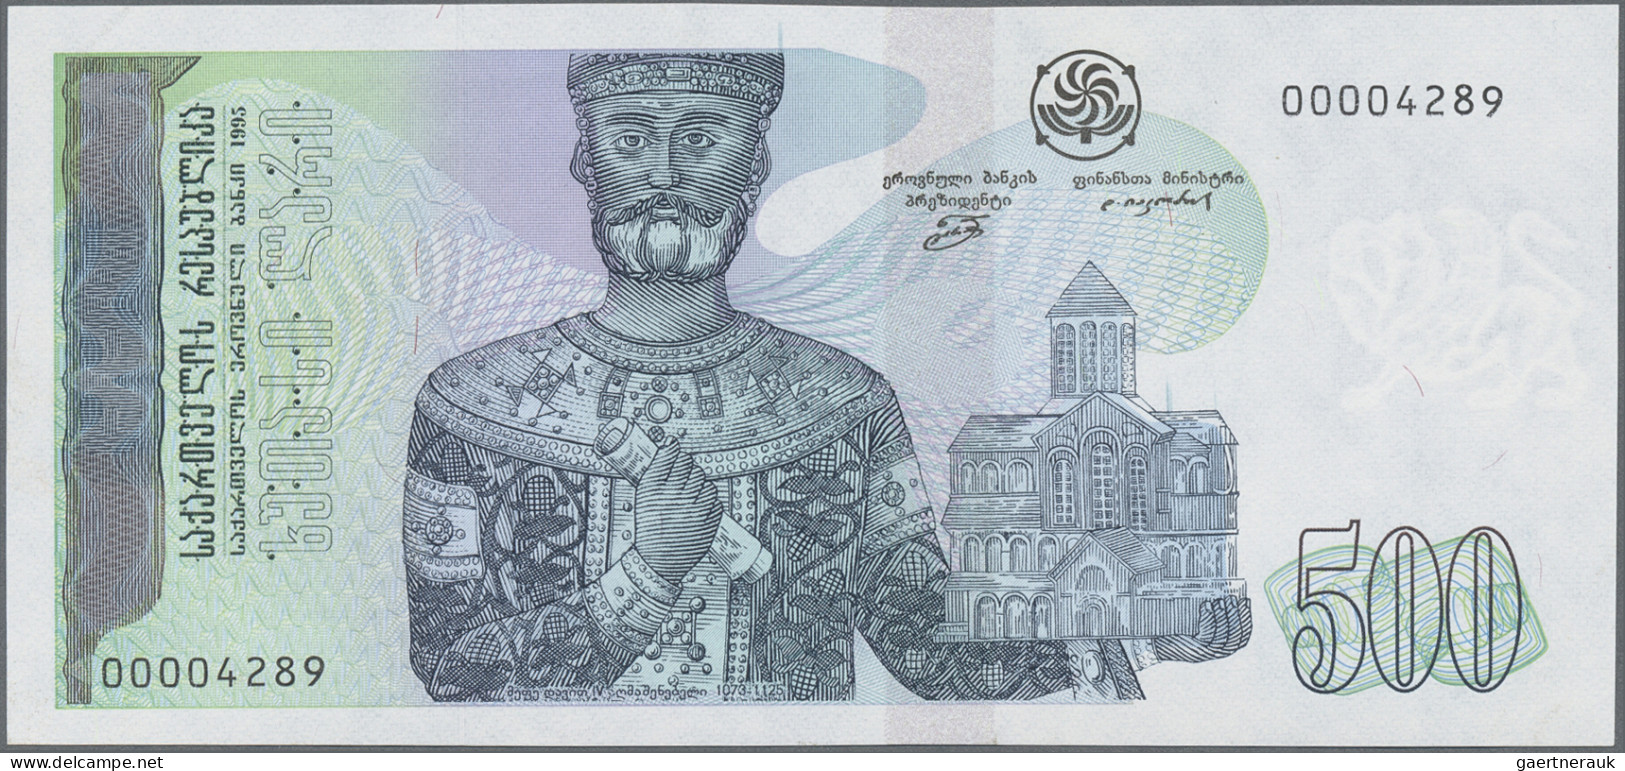 Georgia: Georgian National Bank, 500 Lari 1995, With Low Serial # 00004289, P.60 - Georgia